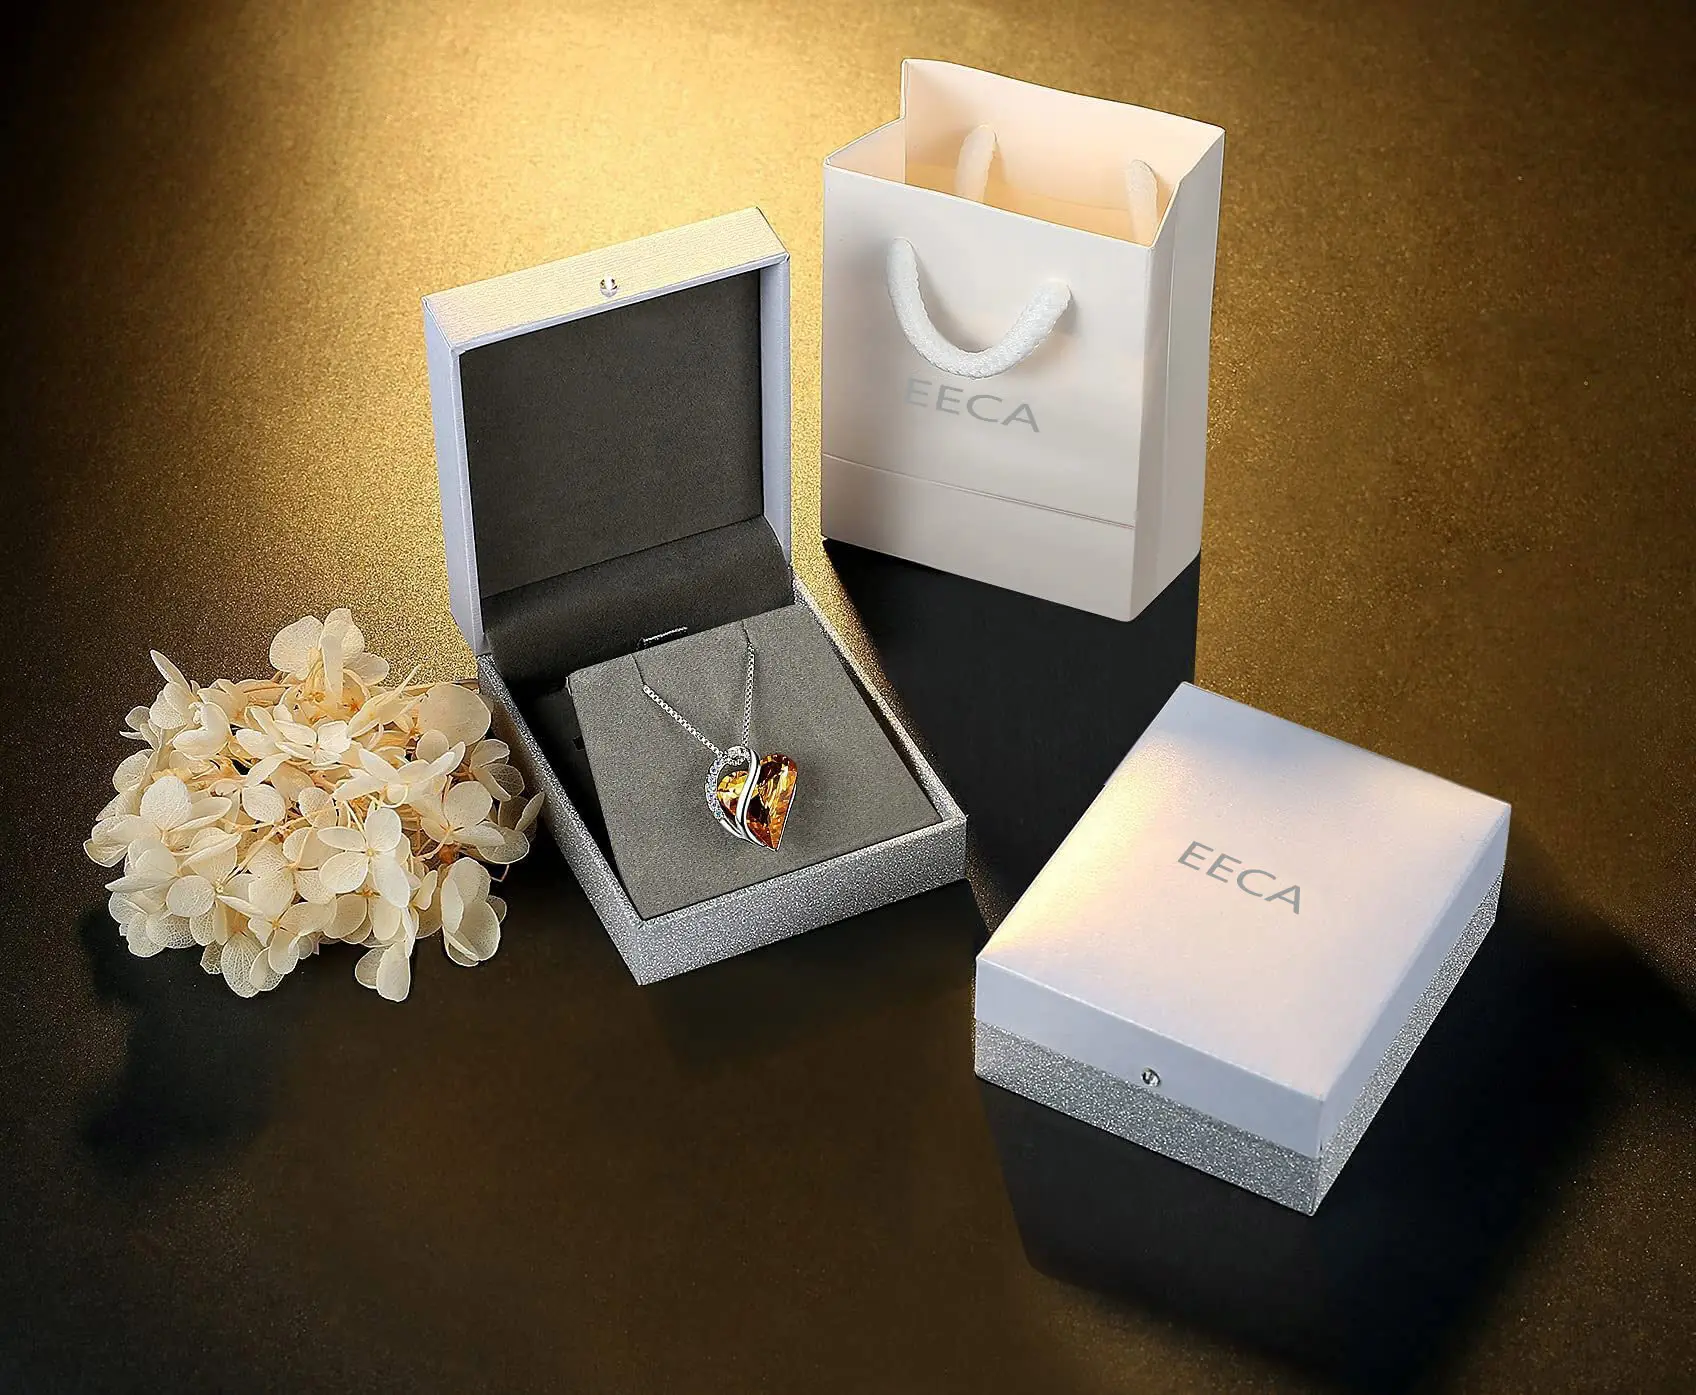 Love Heart Pulseras colgante plata en relieve anillo caja de regalo conjunto collares de lujo joyería exhibición bolsa con inserto de terciopelo